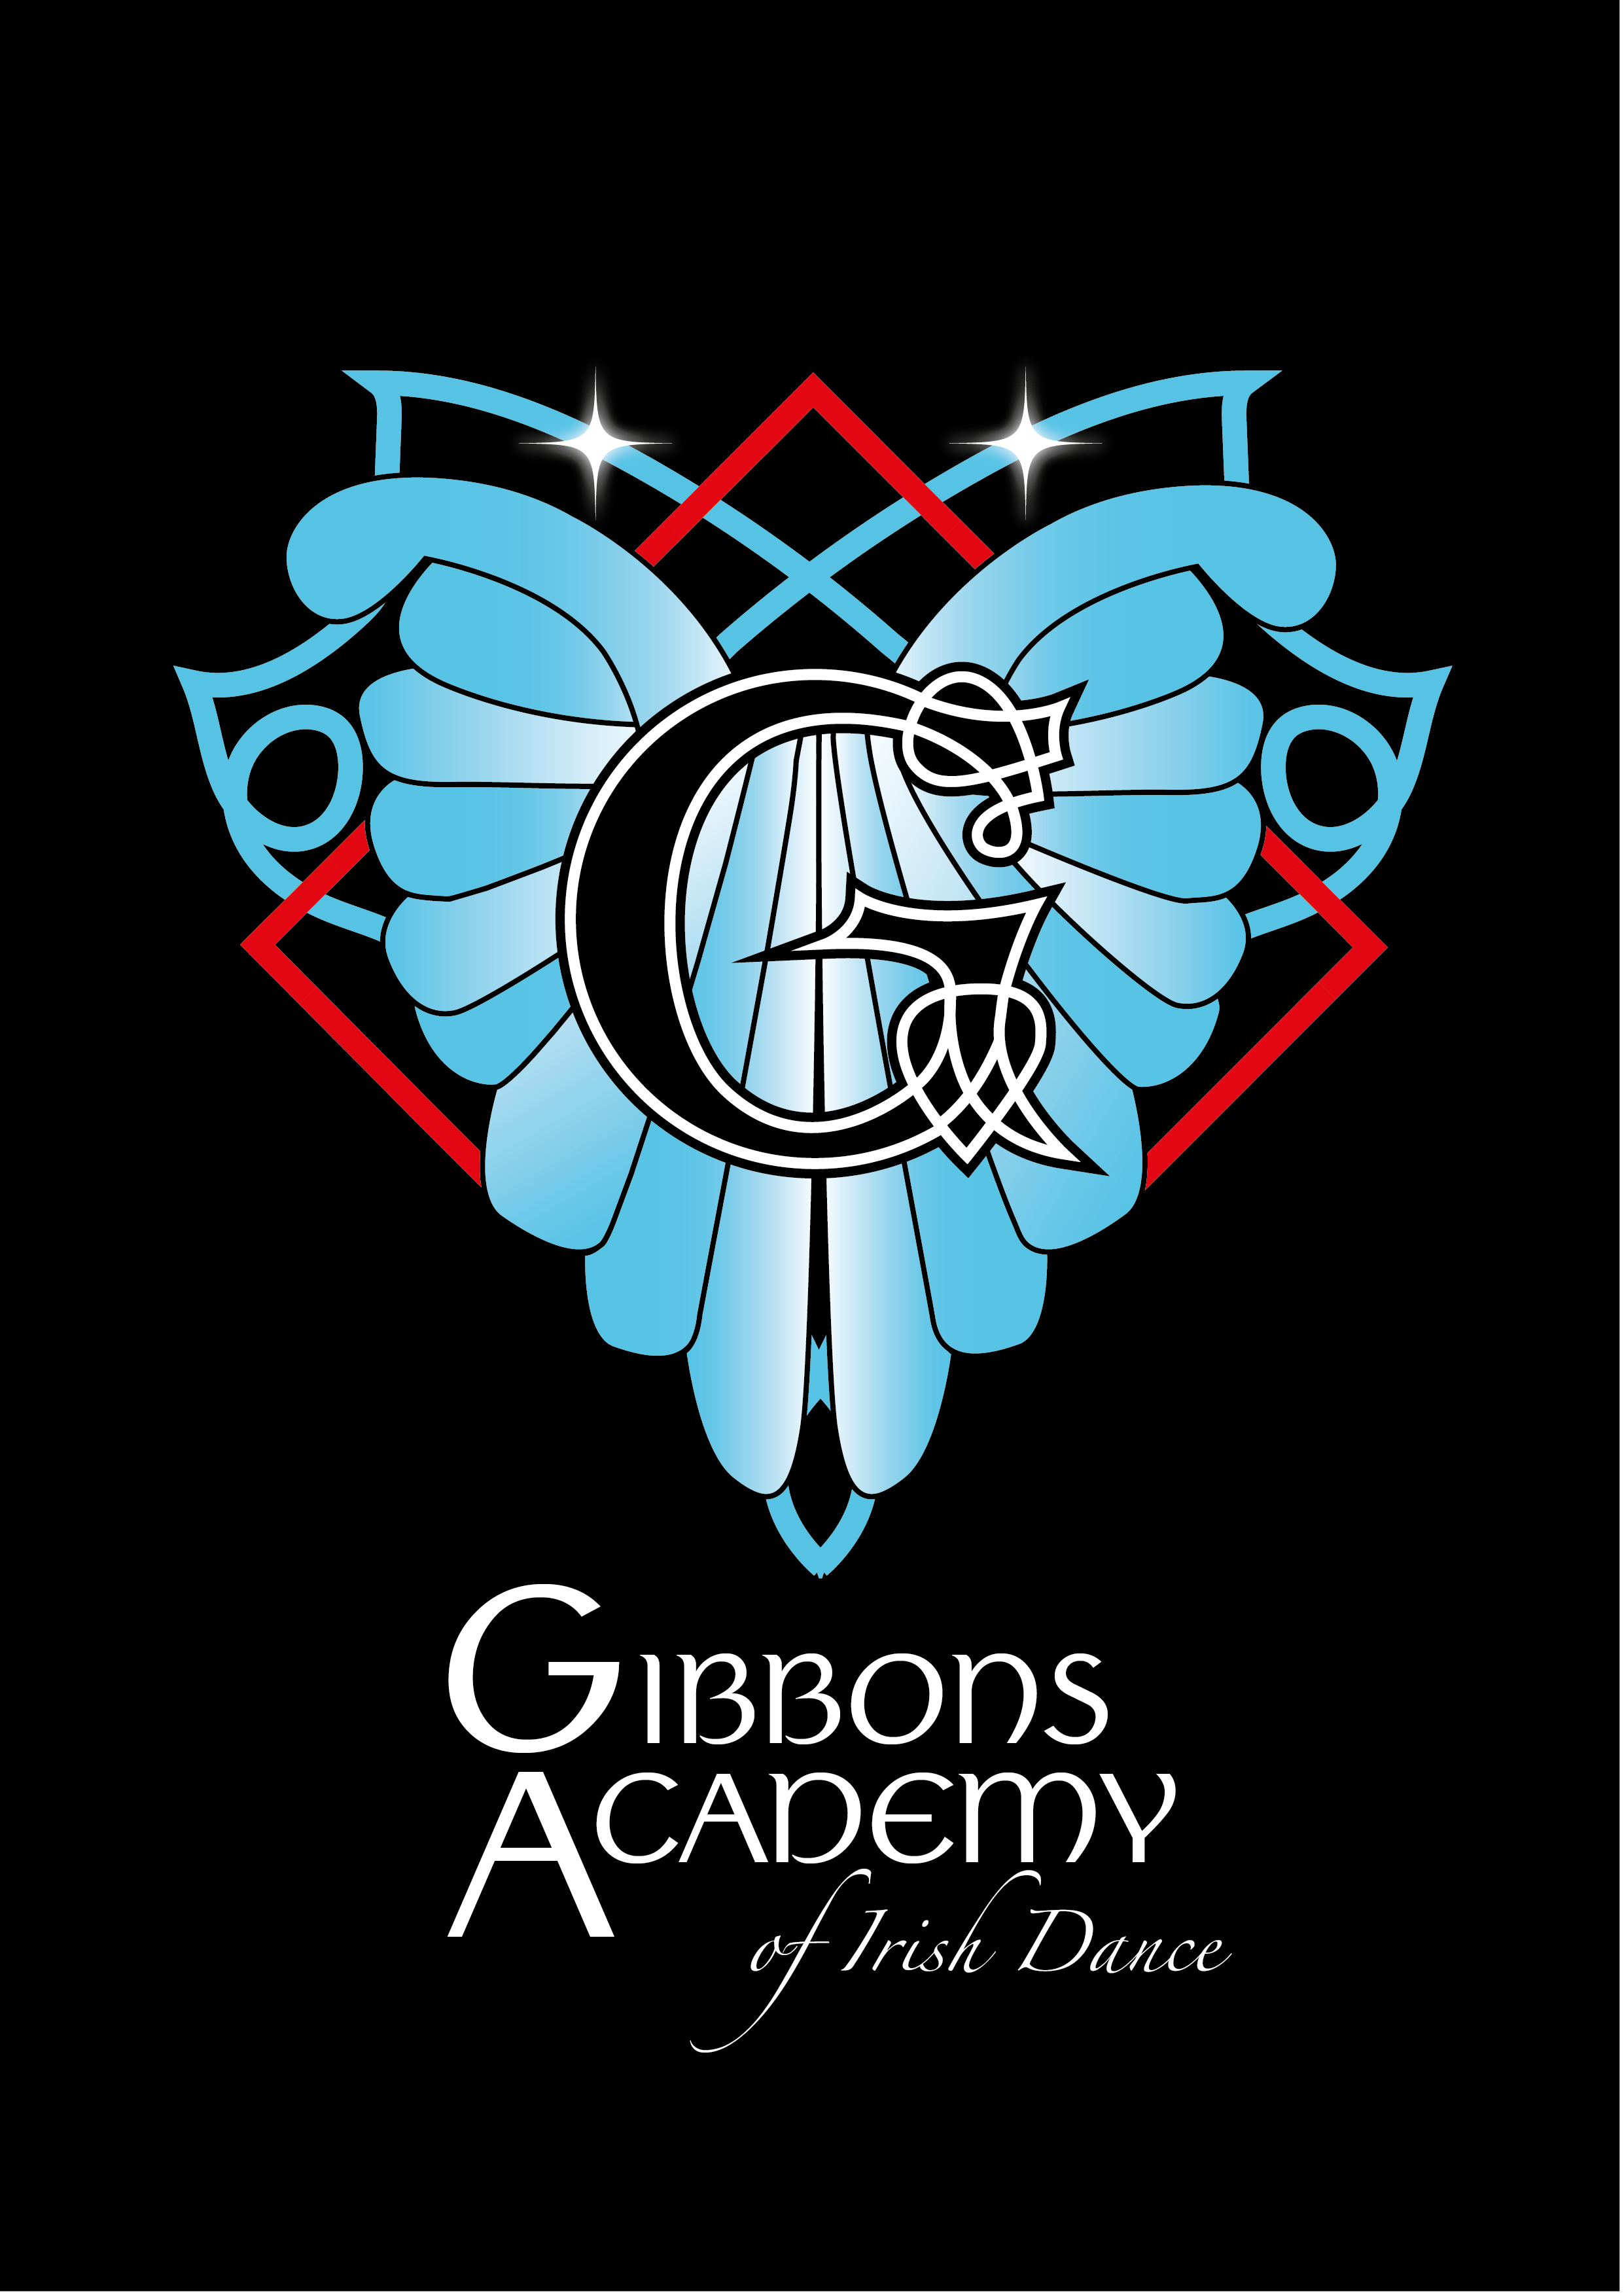 Gibbons Academy of Irish Dance